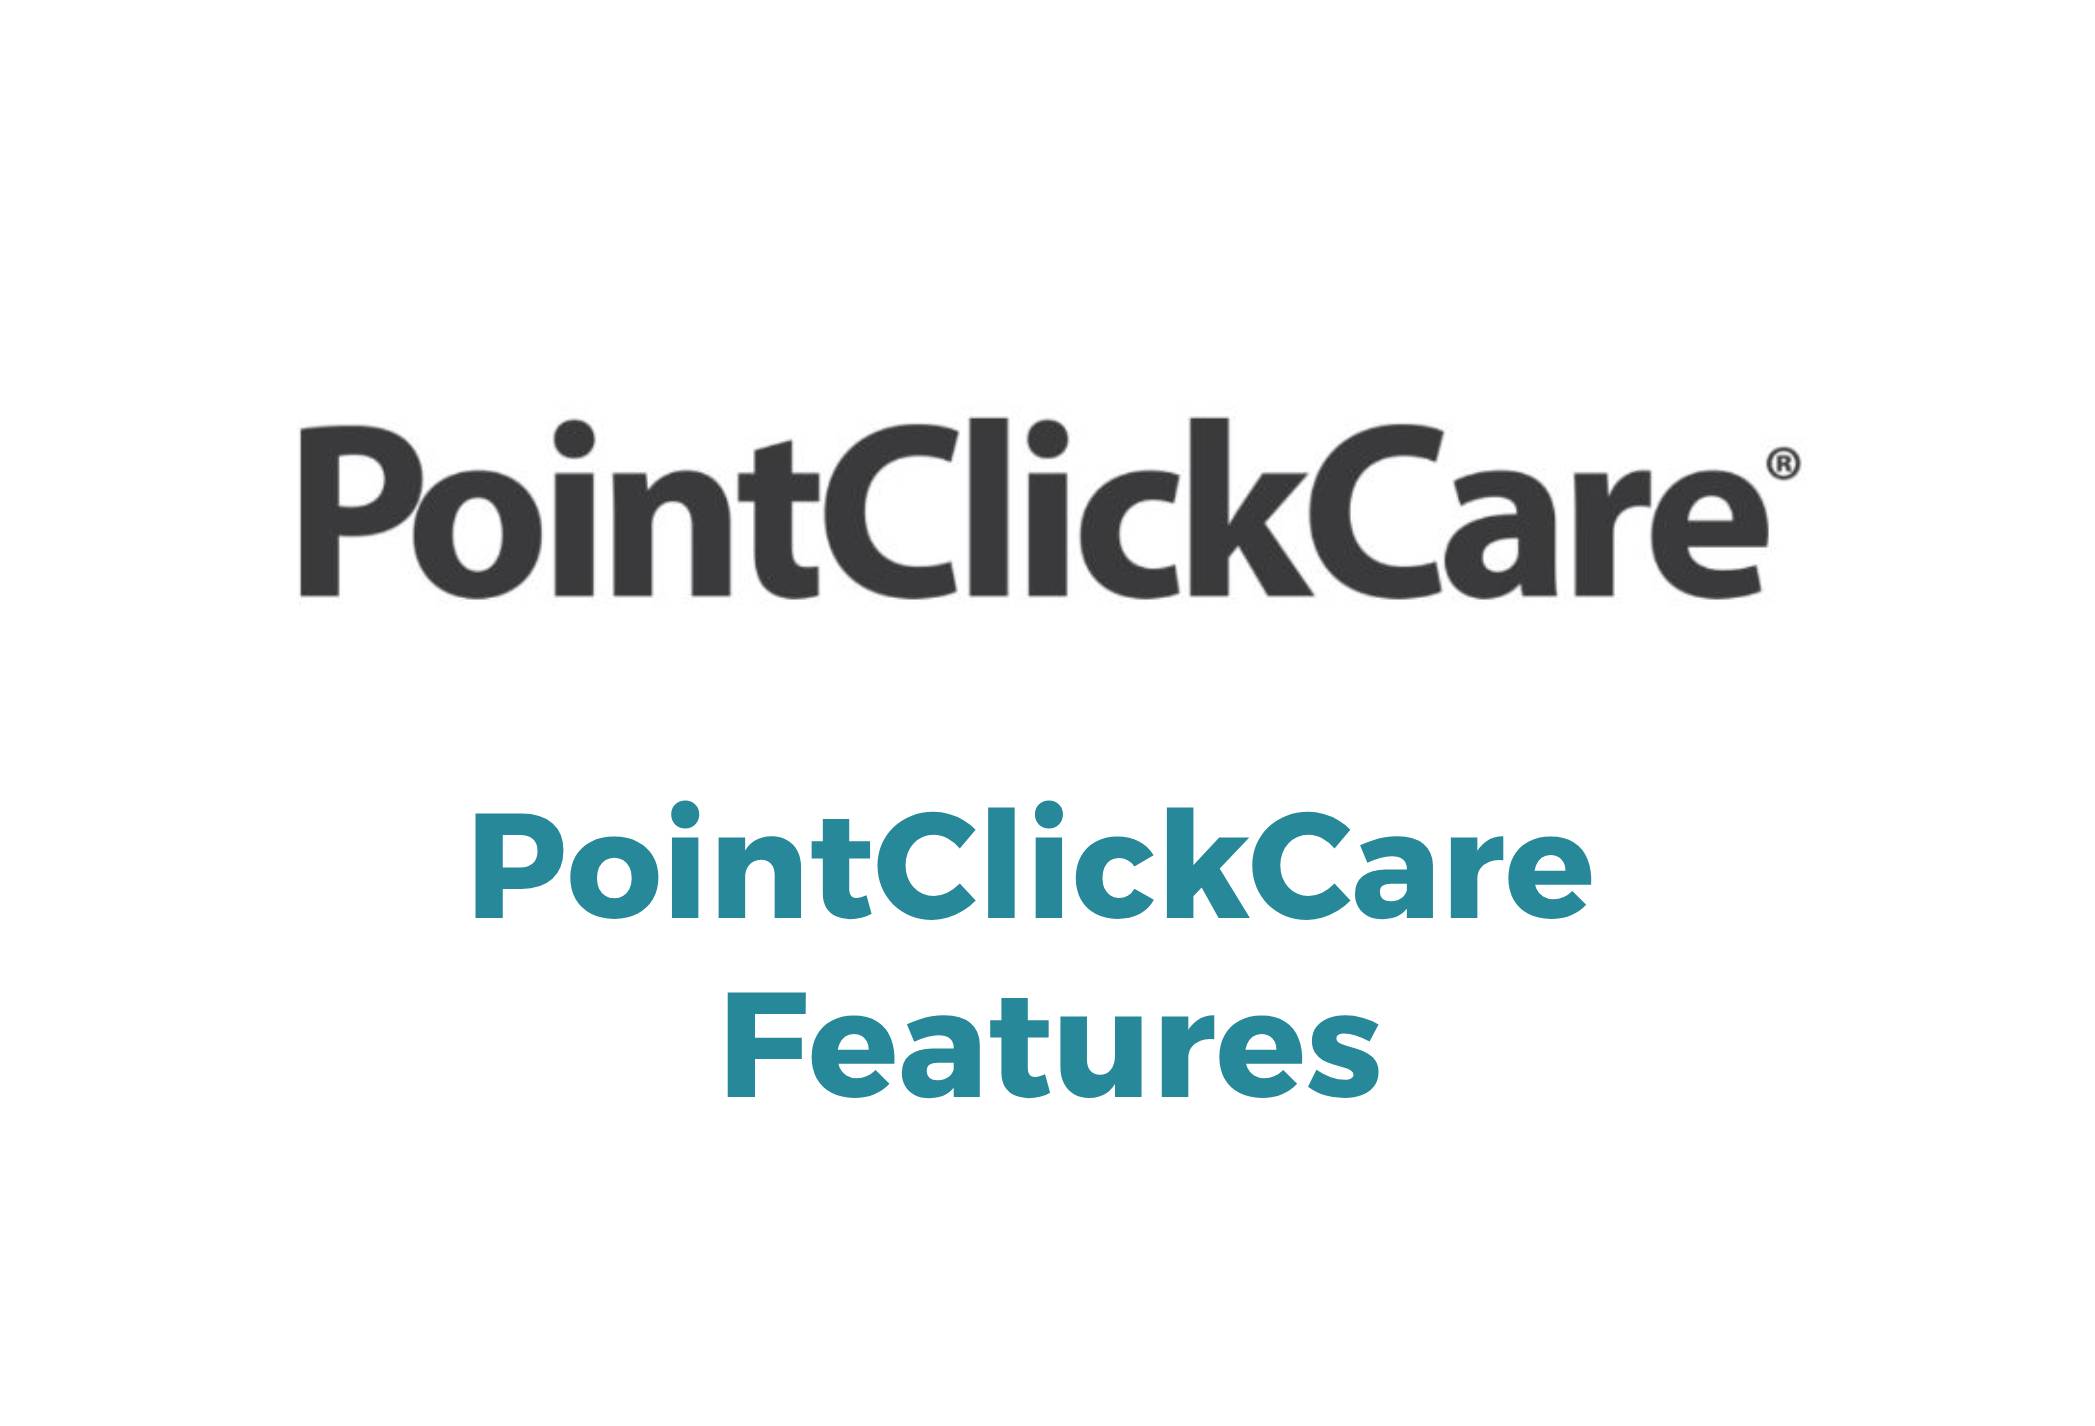 PointClickCare Features